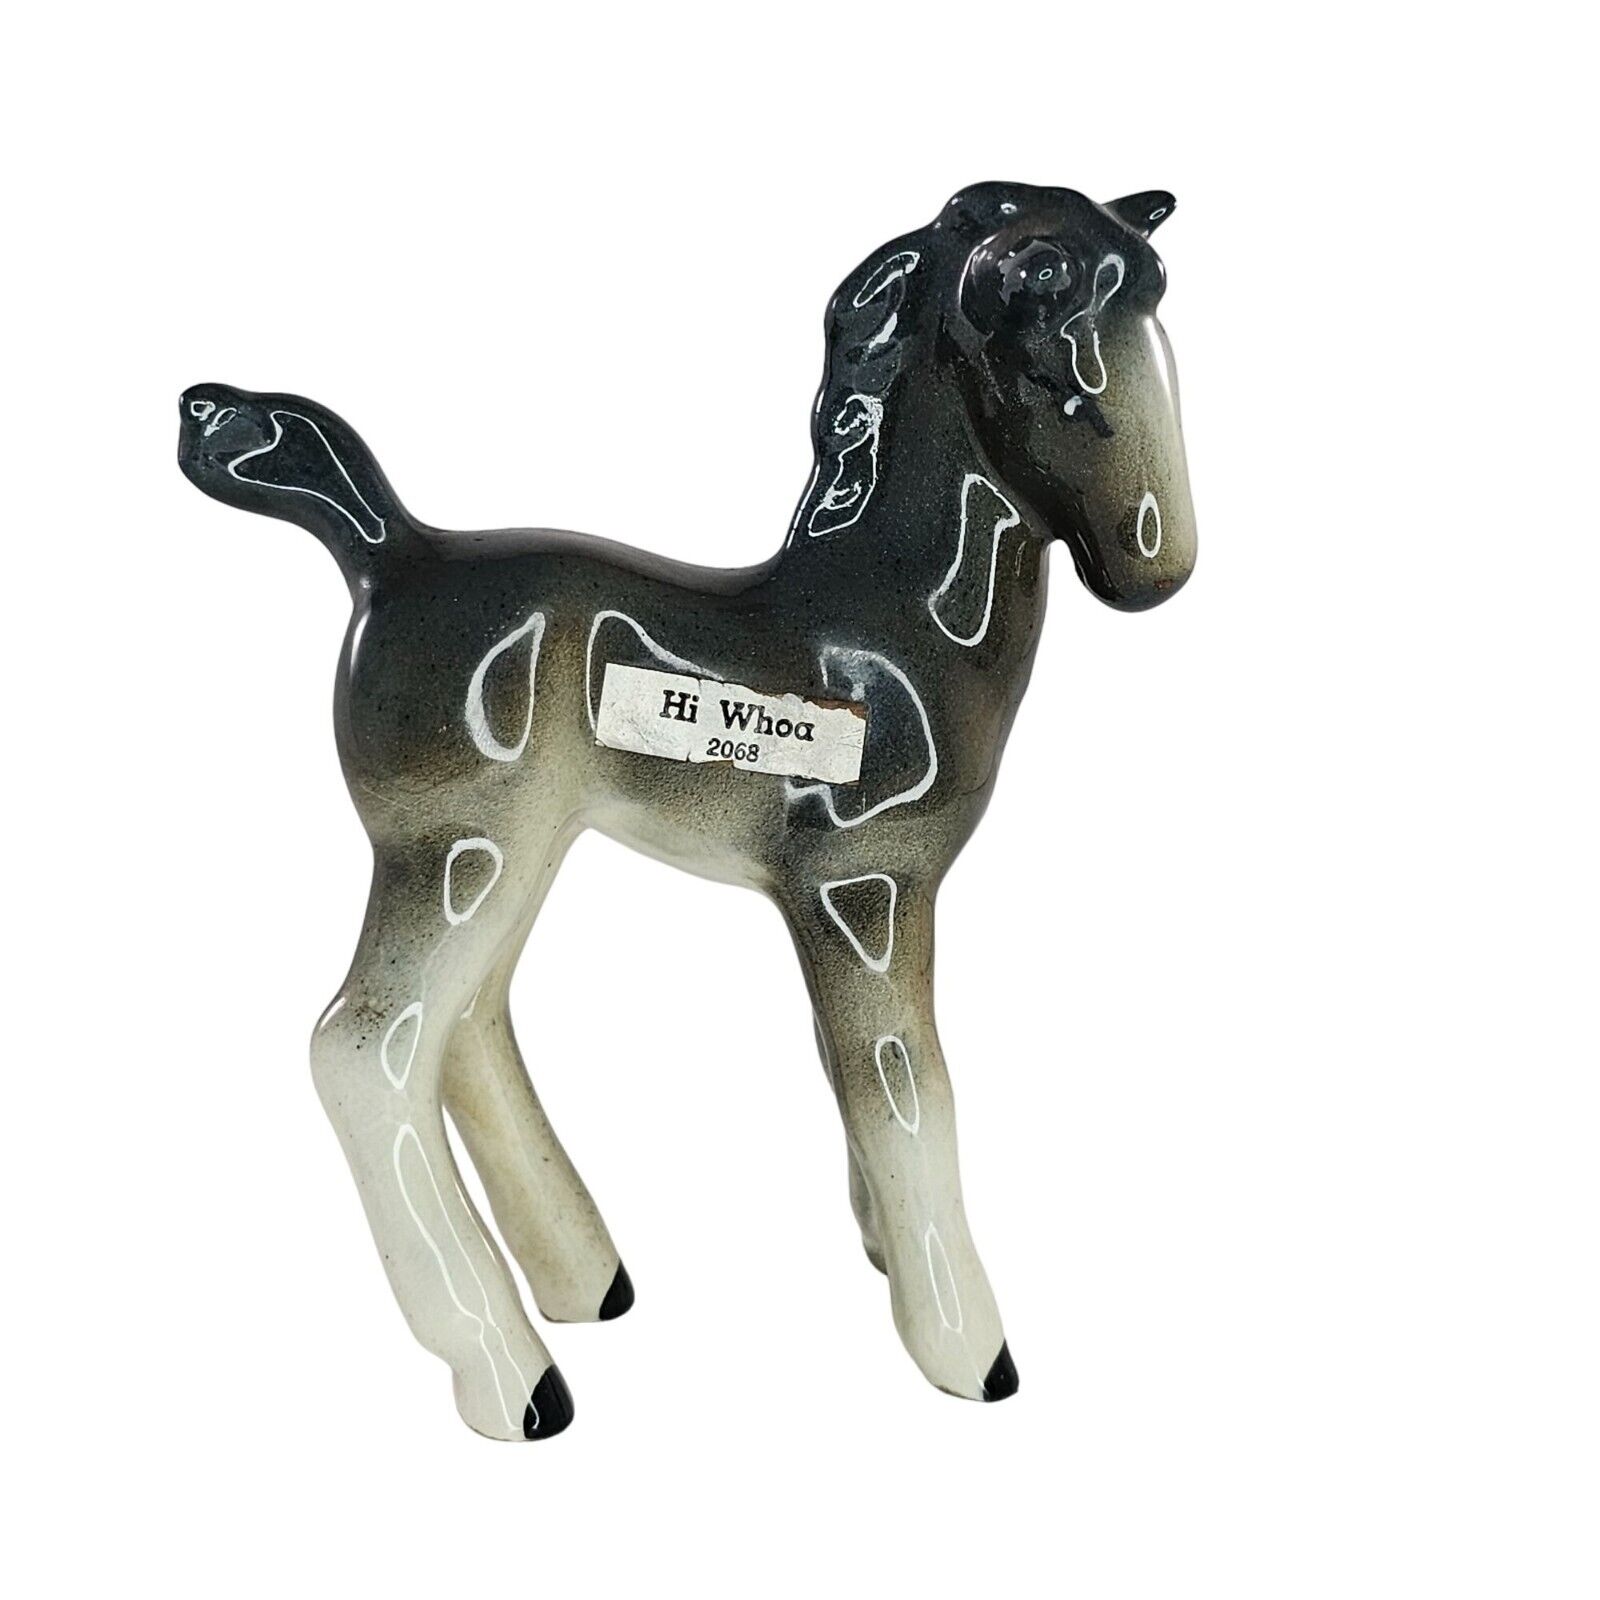 Vintage Robert Simmons Hi Whoa Horse Figurine Grey #2068